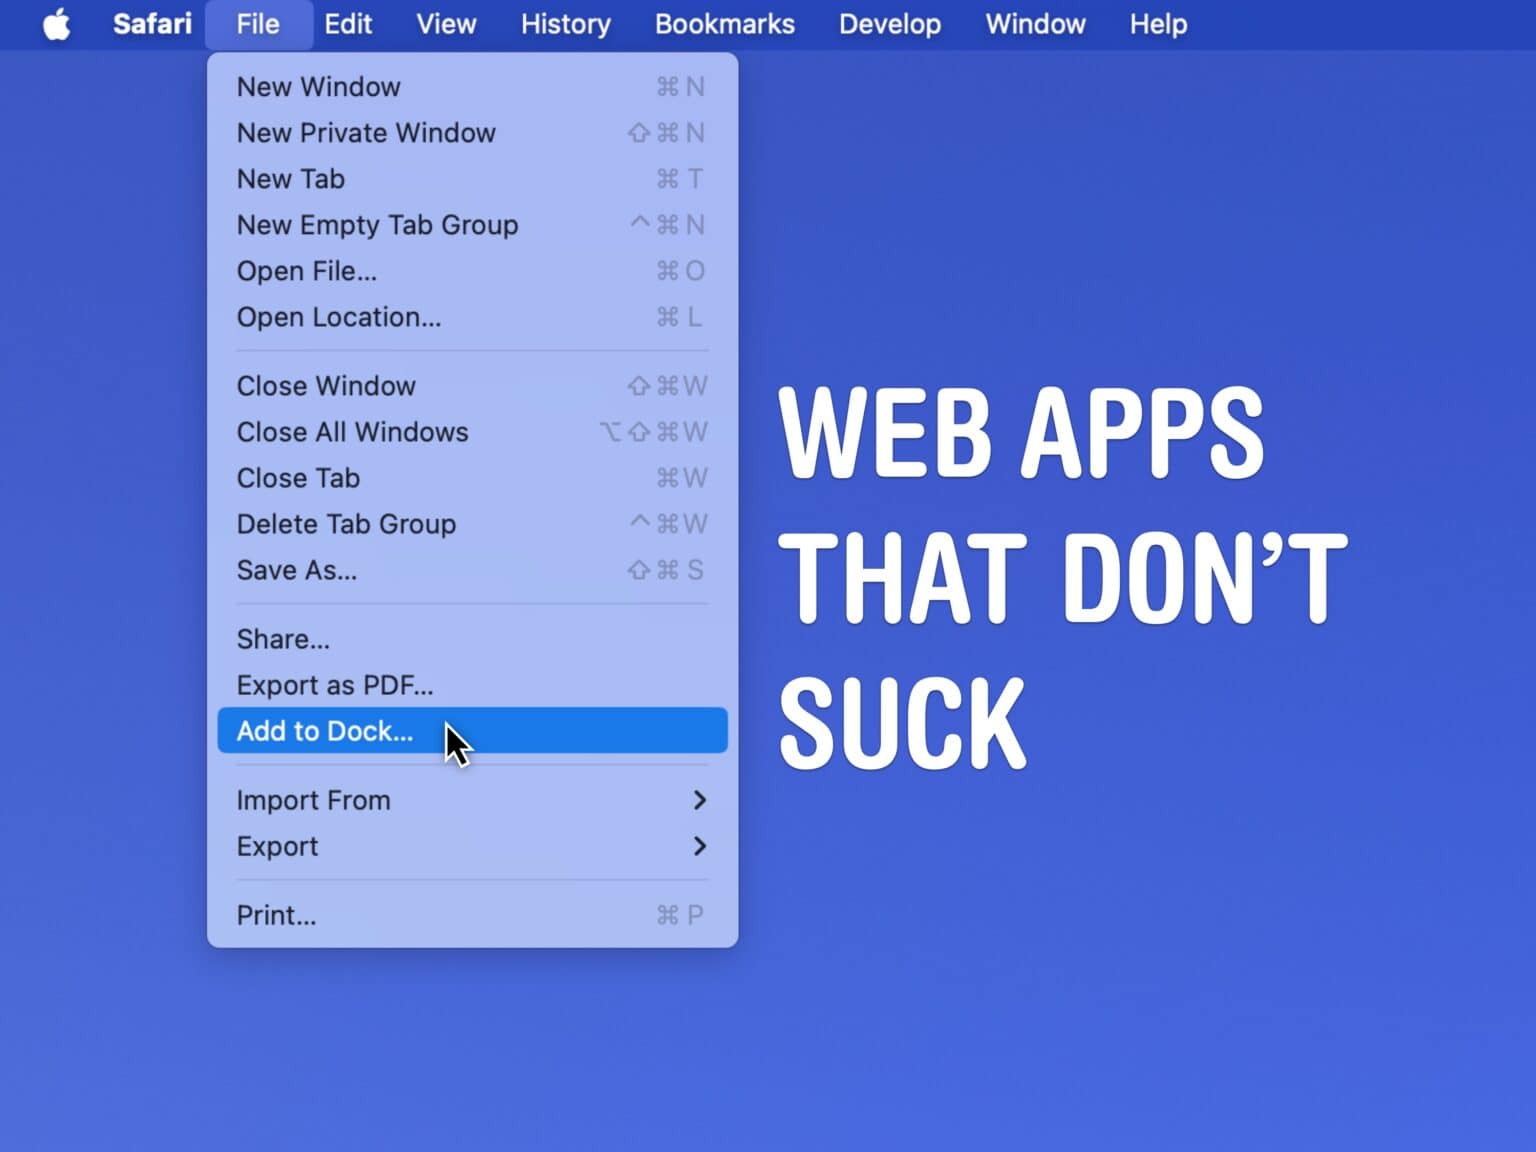 Web apps that don’t suck